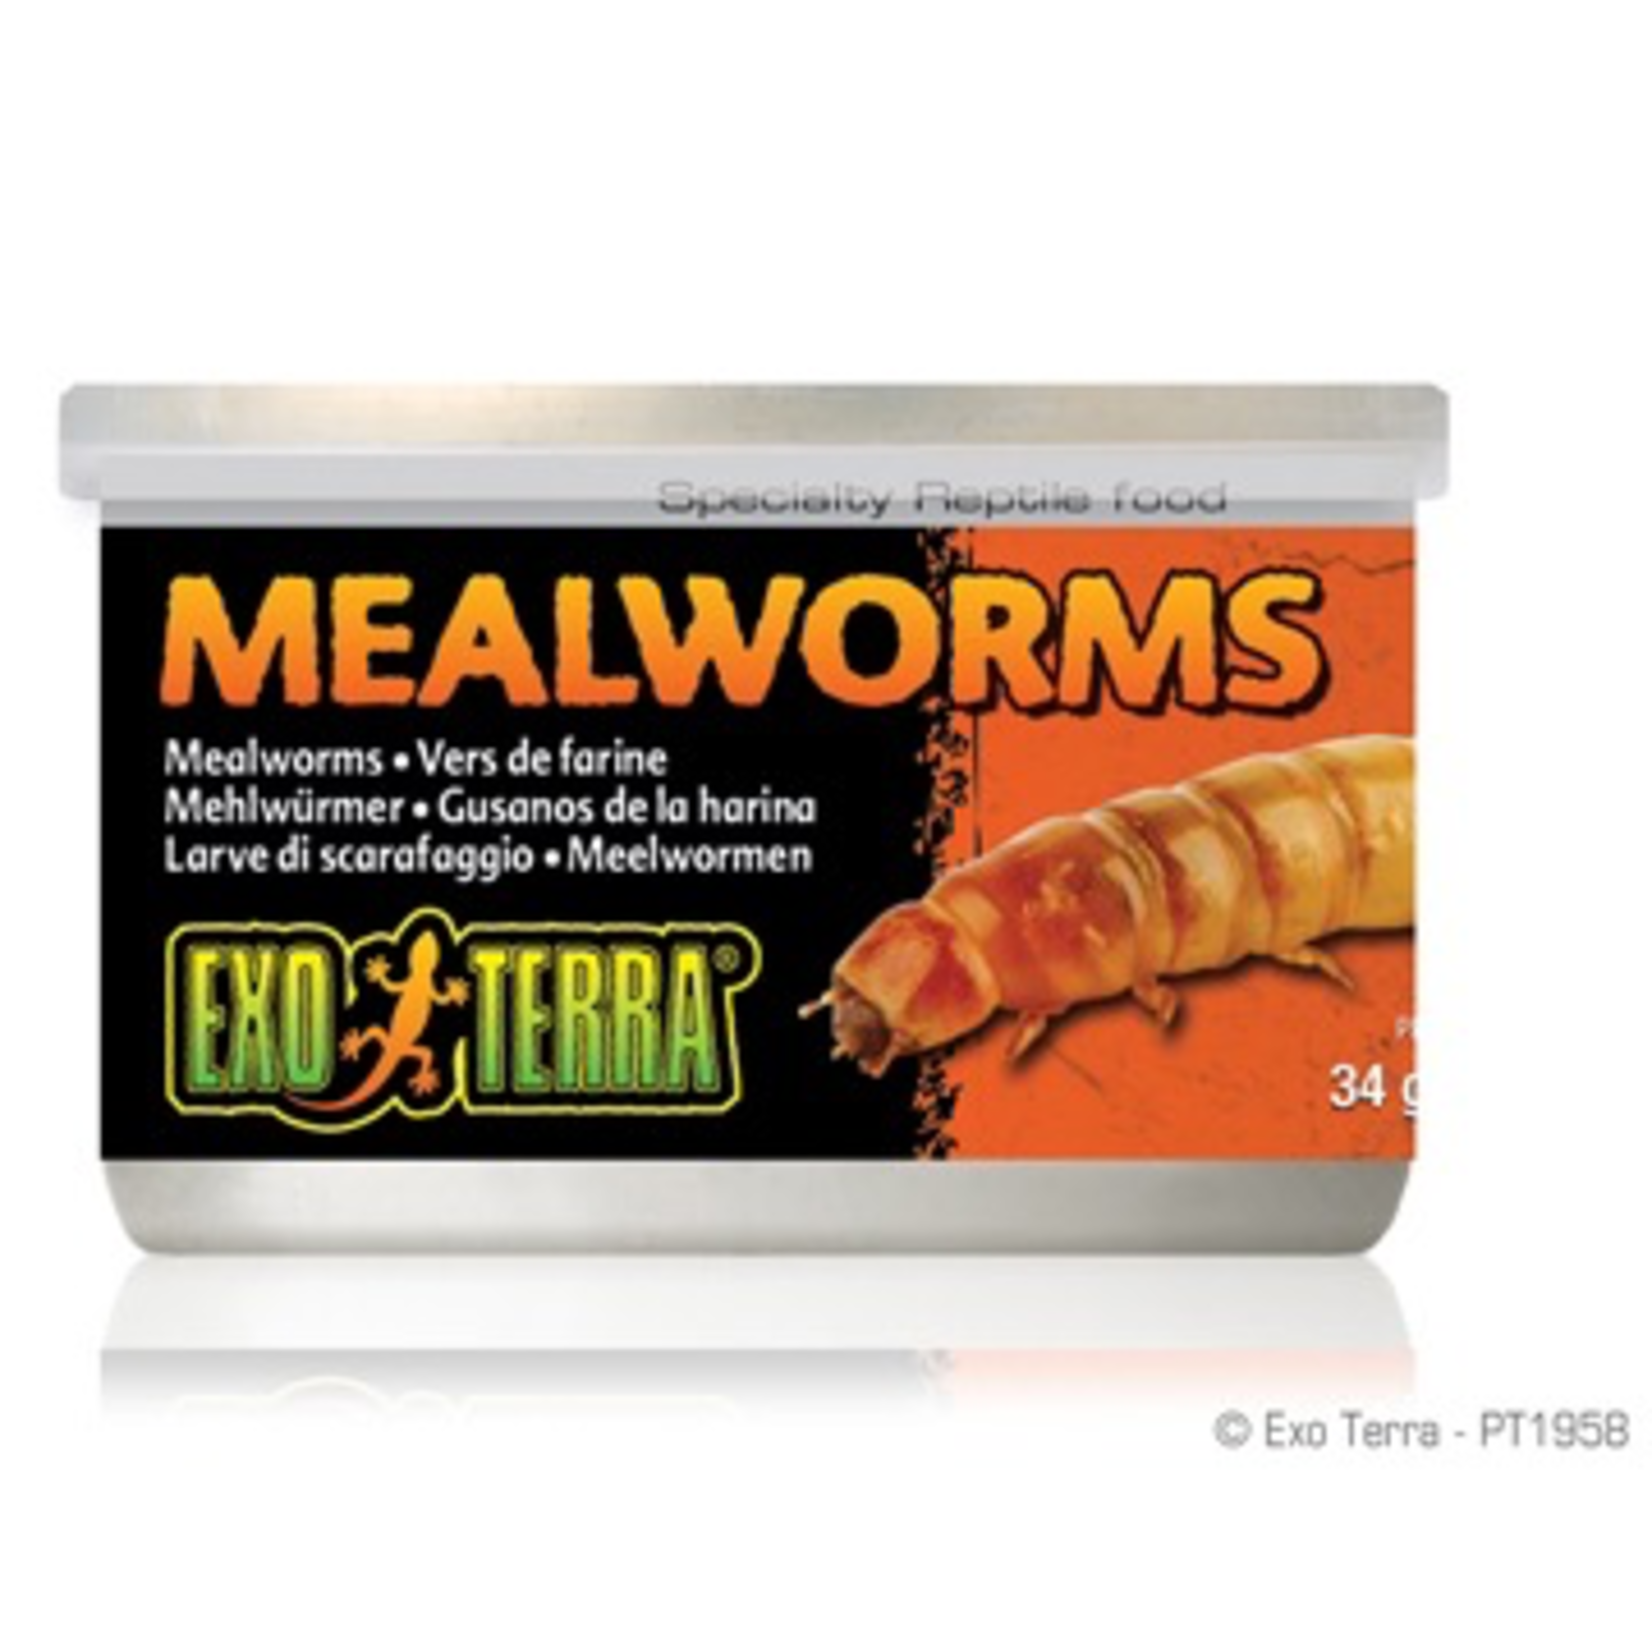 EXO TERRA Exo Terra Canned Mealworms - 34 g (1.2 oz)